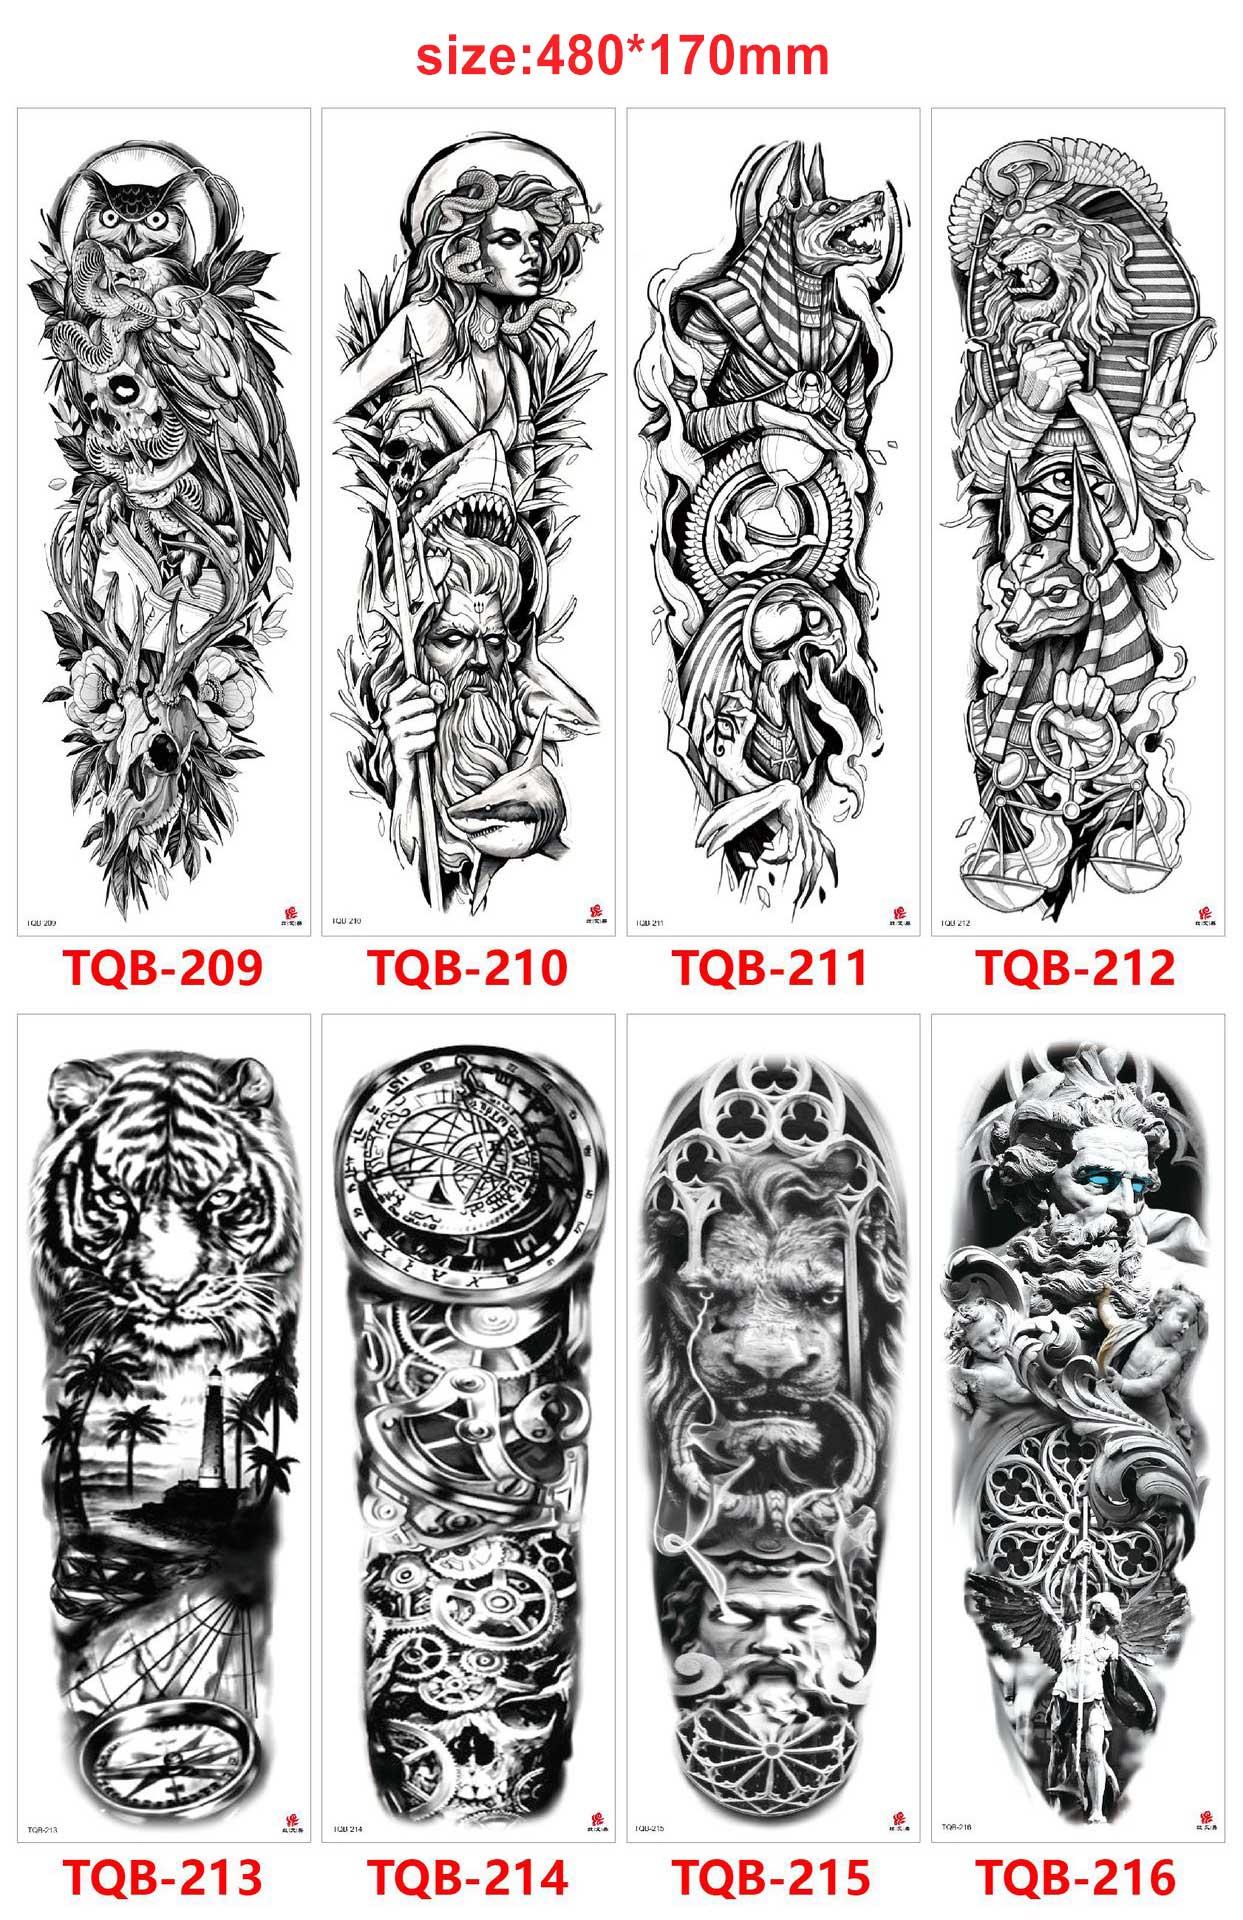 Waterproof Temporary Tattoo Sticker Totem Lion Crown Skull Full Arm Large Size Sleeve Fake Tattoo Flash Tattoo For Men Women